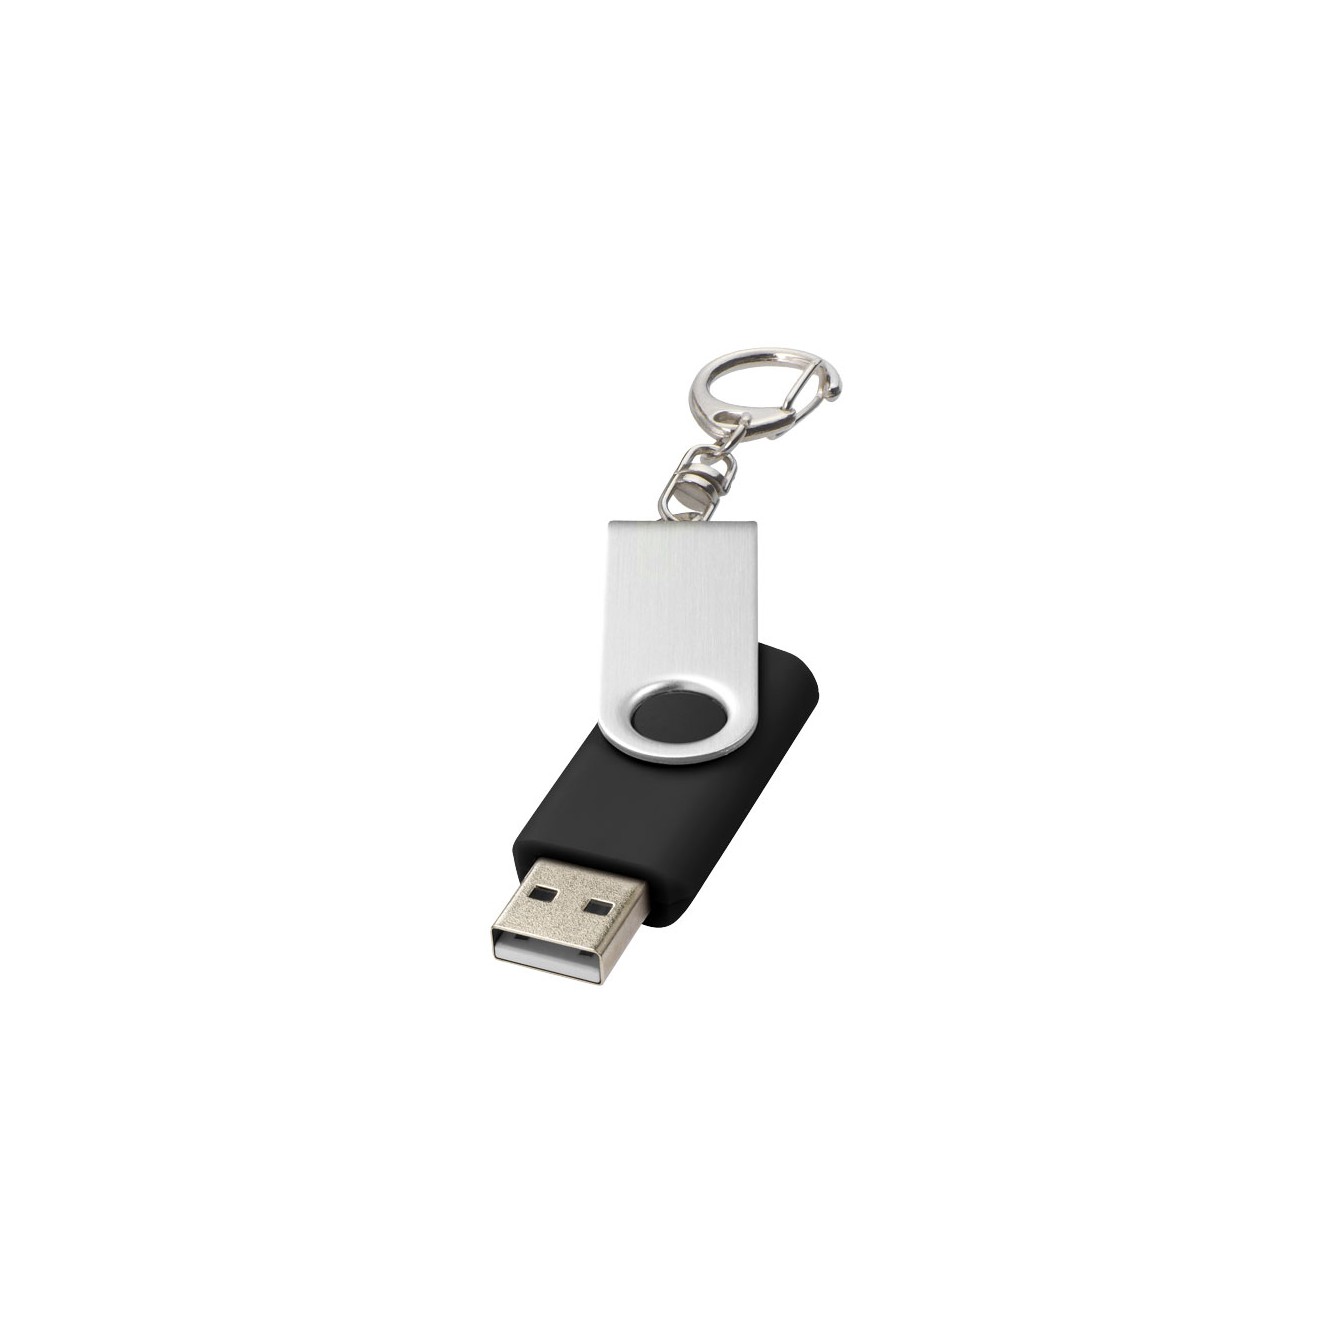 USB stick Rotate met sleutelhanger